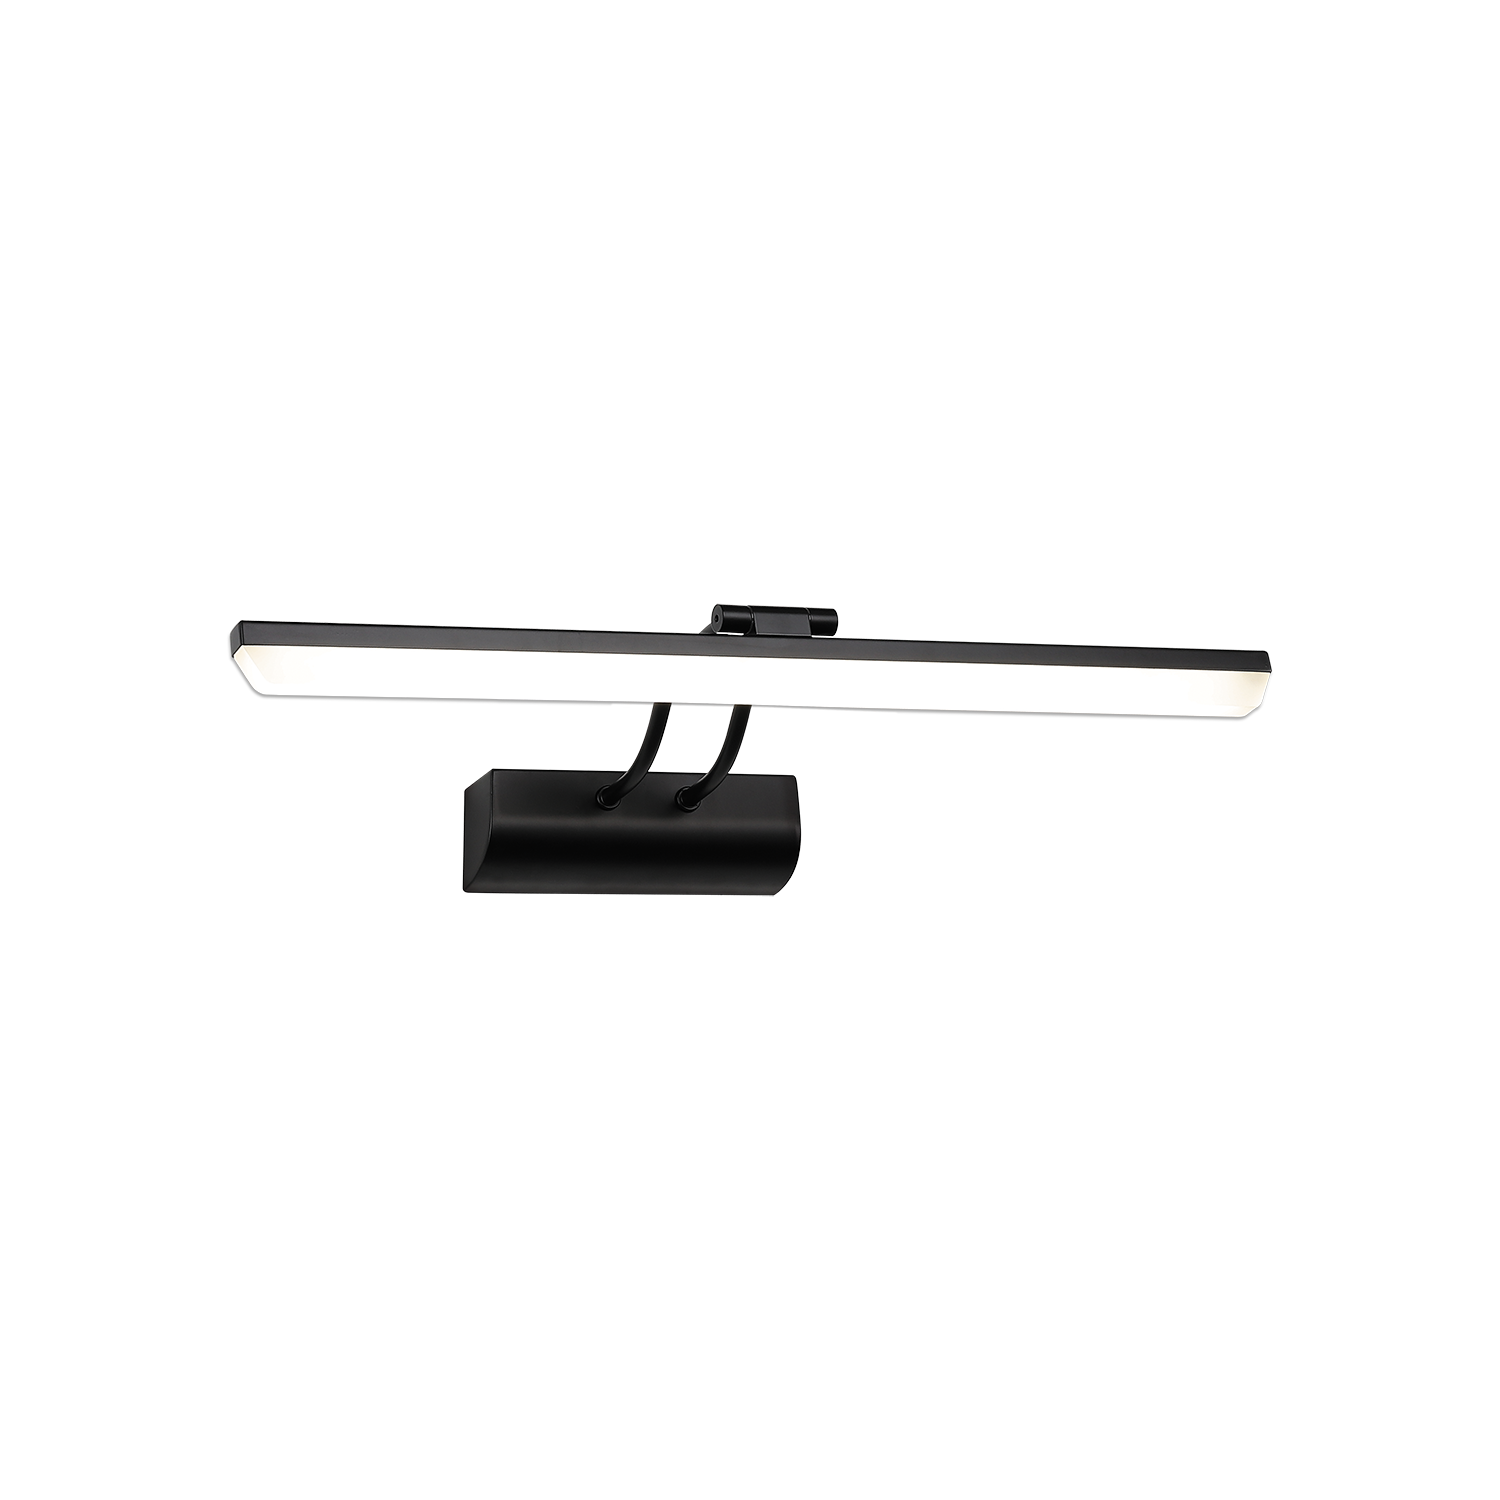 Gauss Настенный светодиодный светильник Medea BR024 12W 770lm 200-240V 550mm LED 1/20